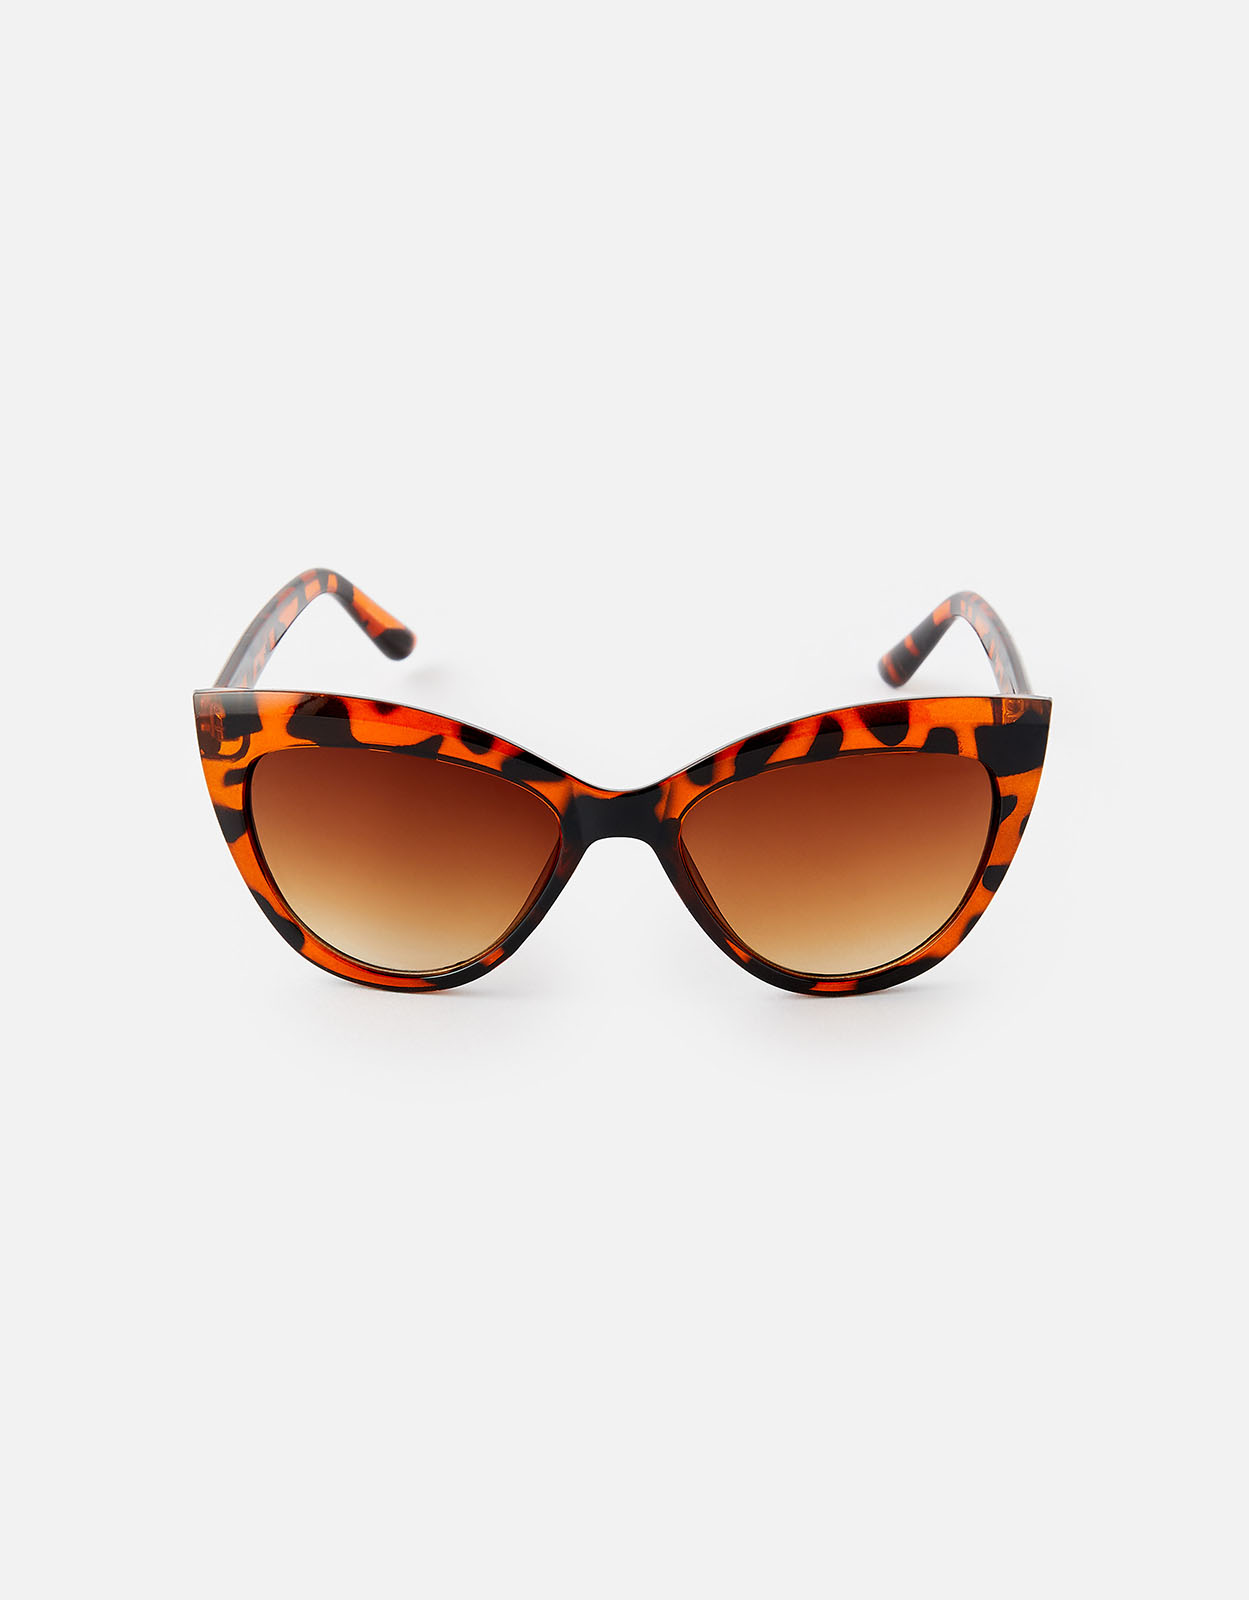 Accessorize Ladies Brown and Black Classic Tortoiseshell Ava Cat Eye Sunglasses, Size: 17cm